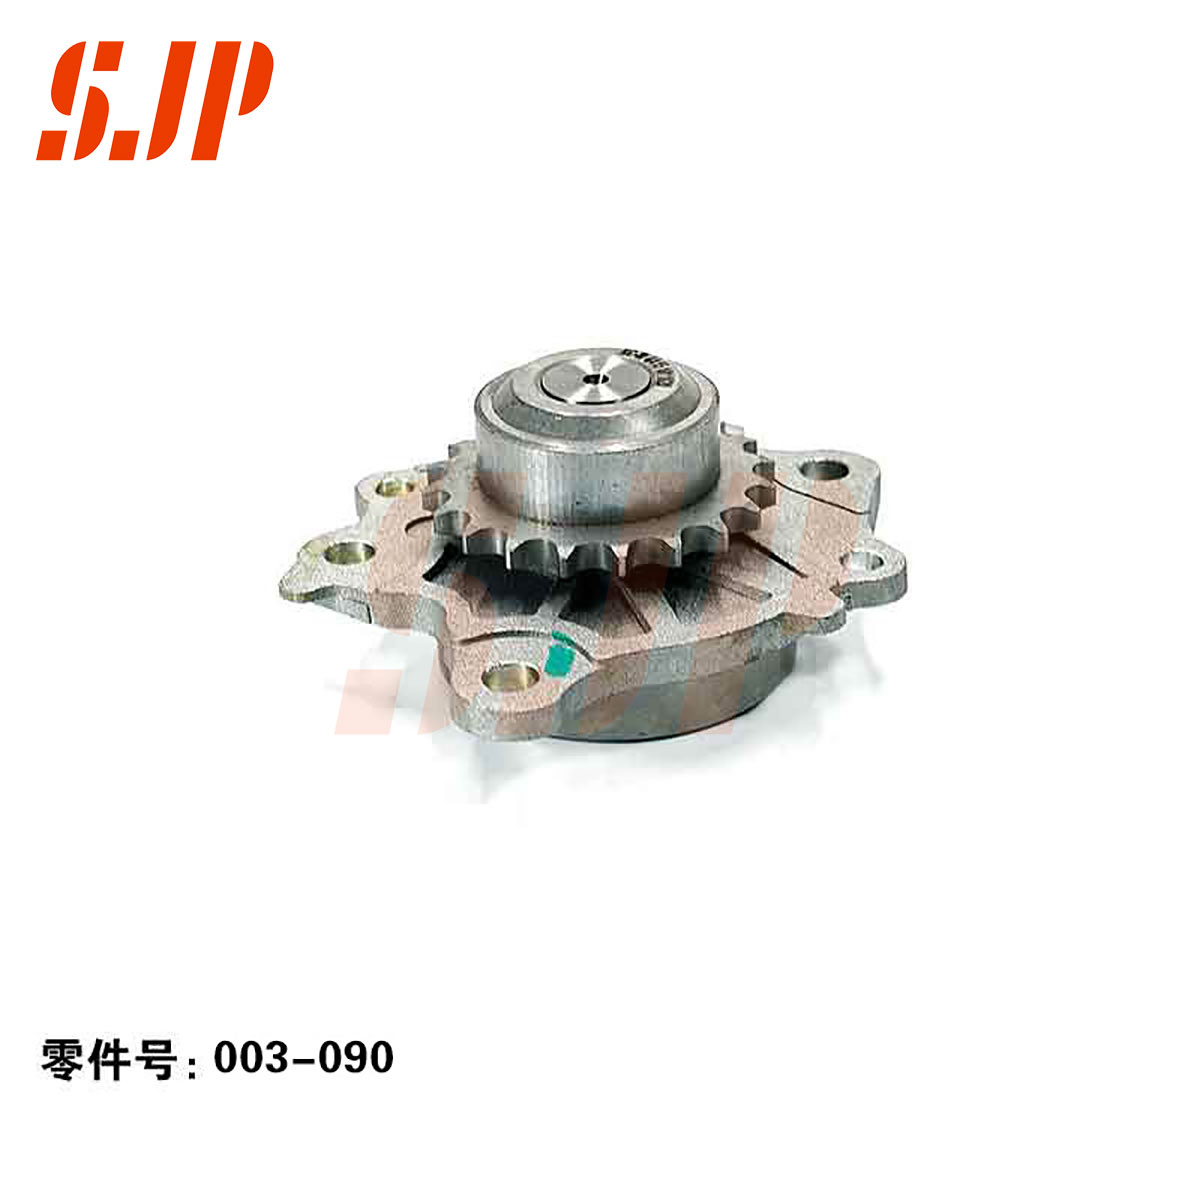 SJ-003-090 Oil Pump For Brilliance Auto Zhishang S30/S35 4A15